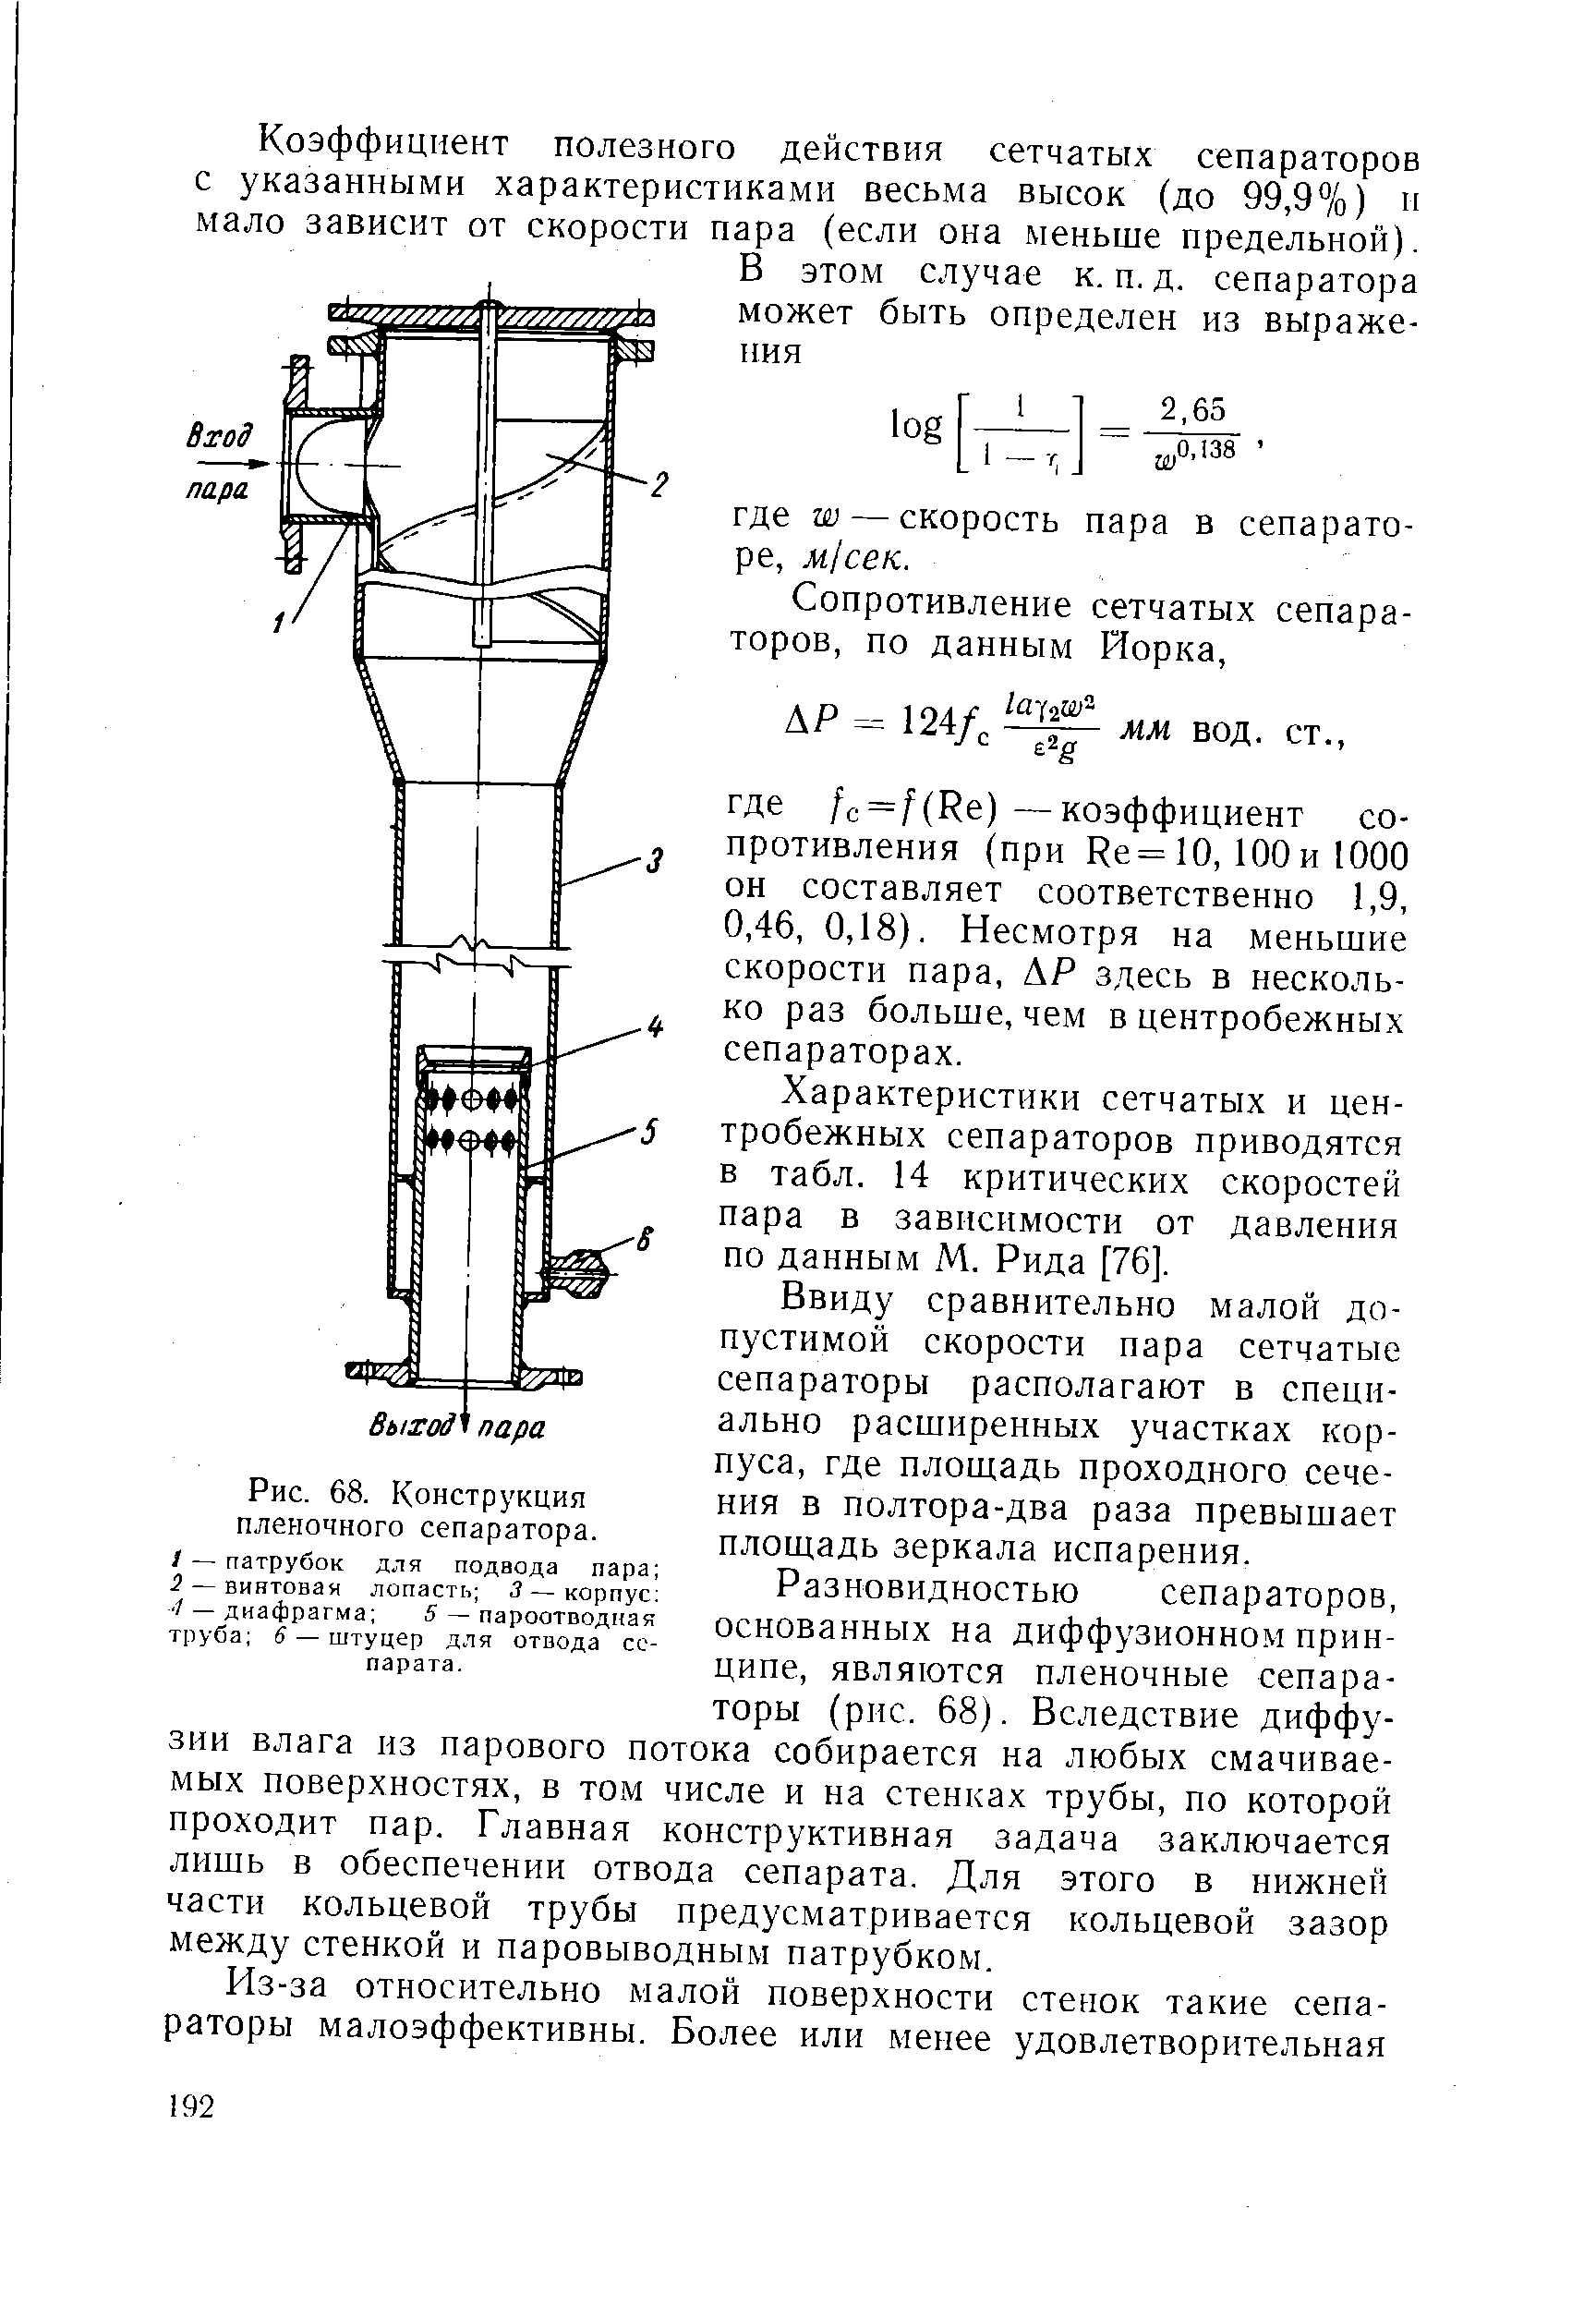 Рис. 68. Конструкция пленочного сепаратора.
